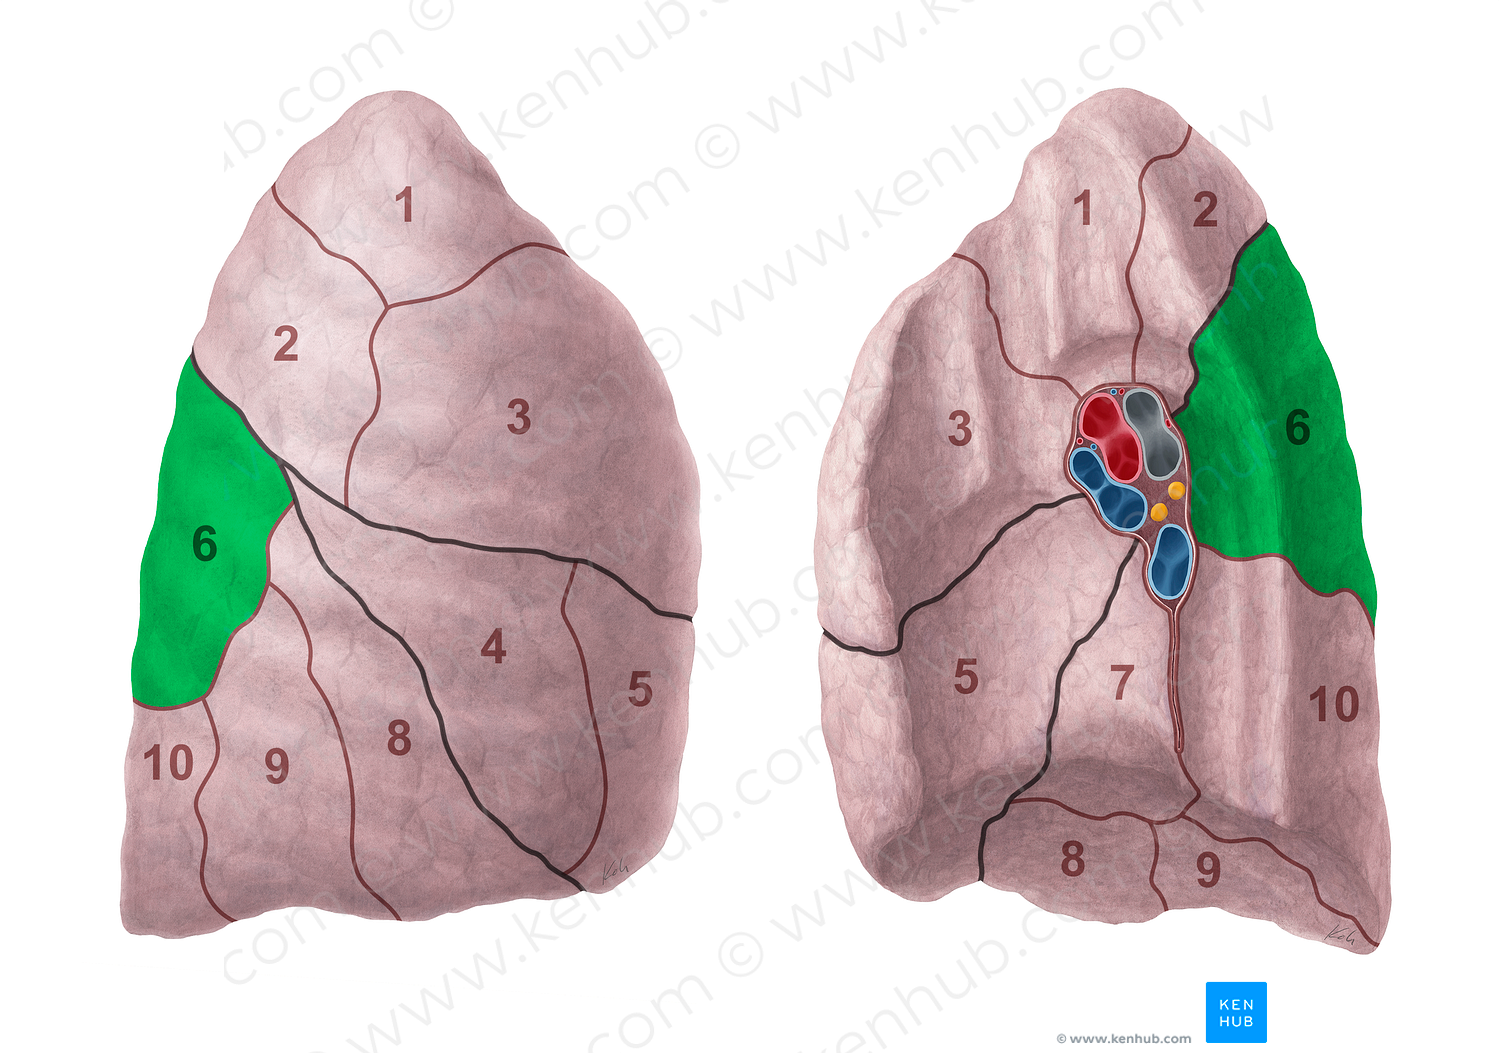 Superior segment of right lung (#20693)